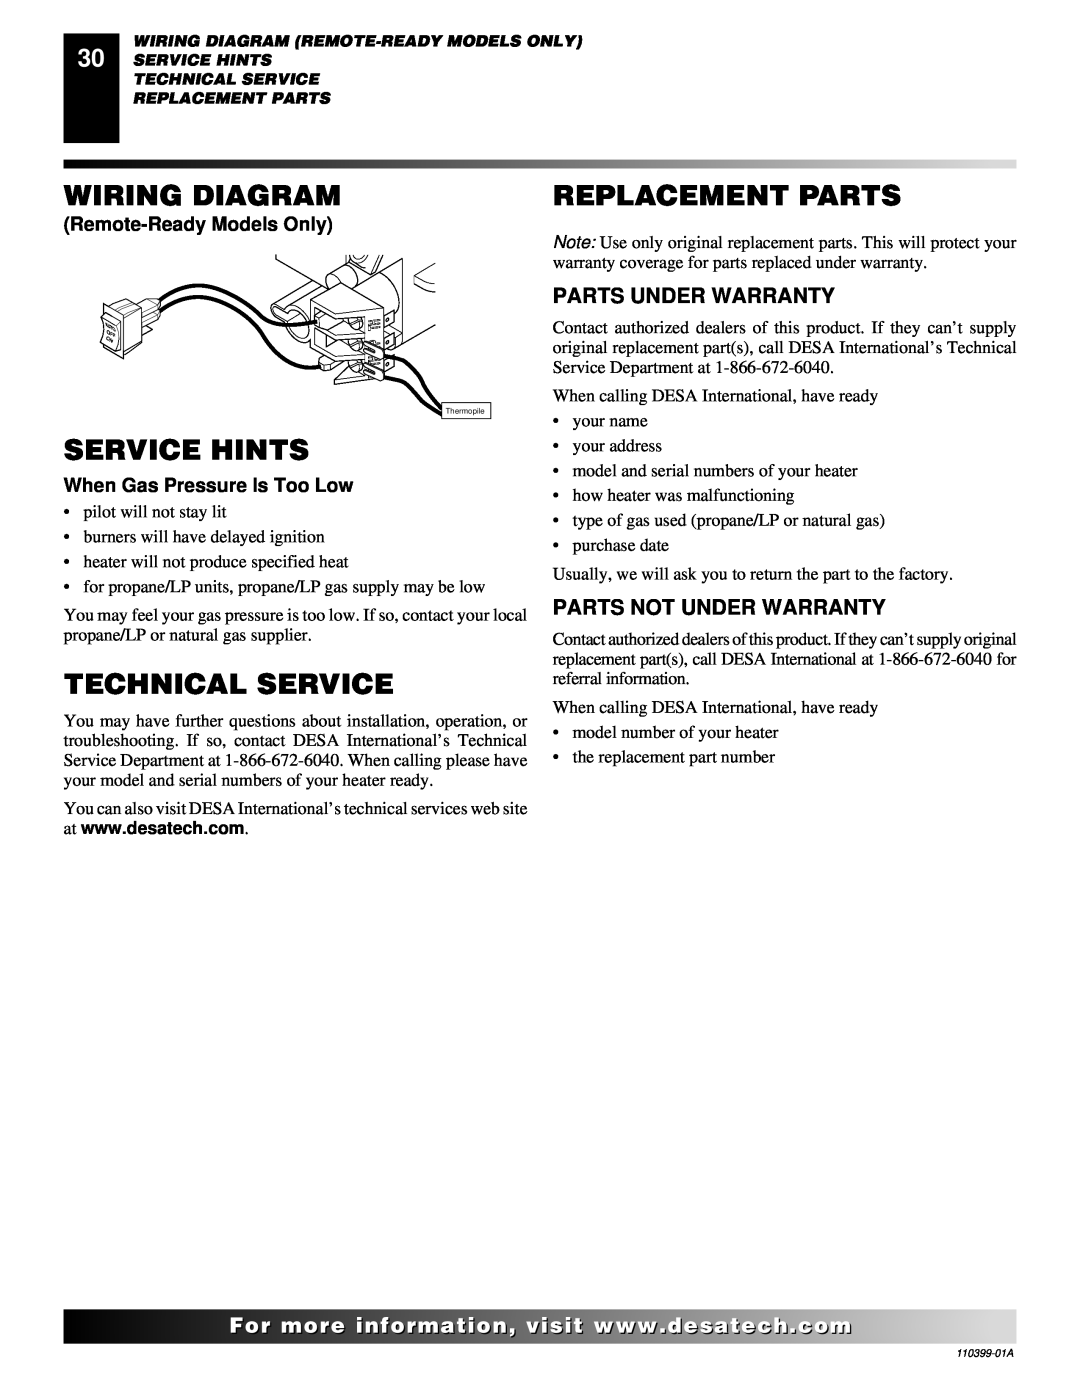 Desa FLAME-MAX Golden Wiring Diagram, Service Hints, Technical Service, Replacement Parts, Parts Under Warranty 